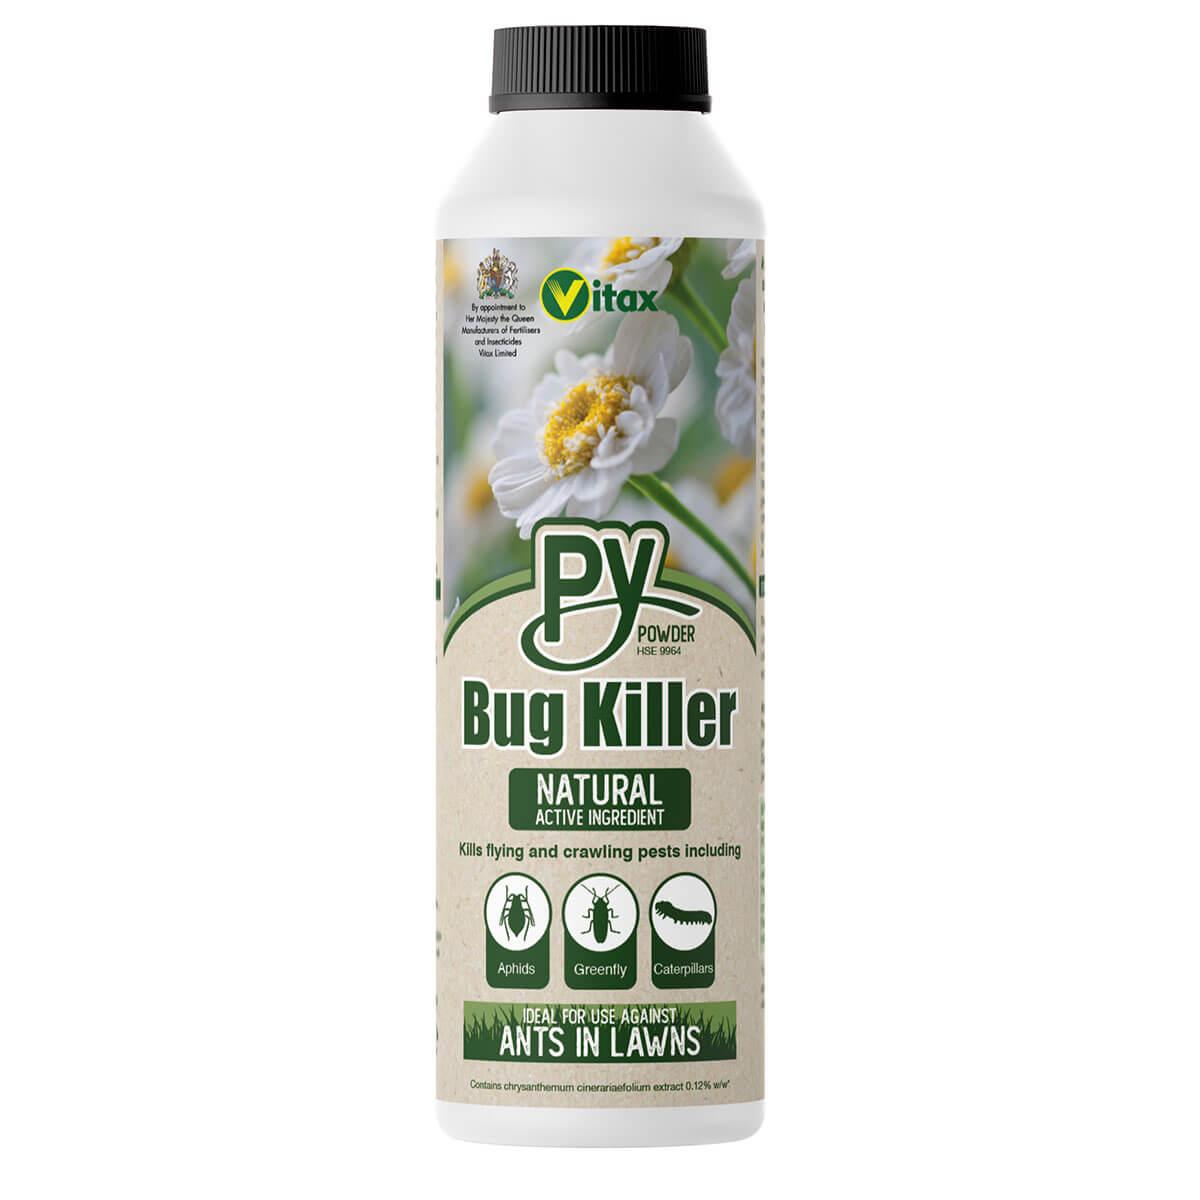 Py Powder Bug Killer (175g)